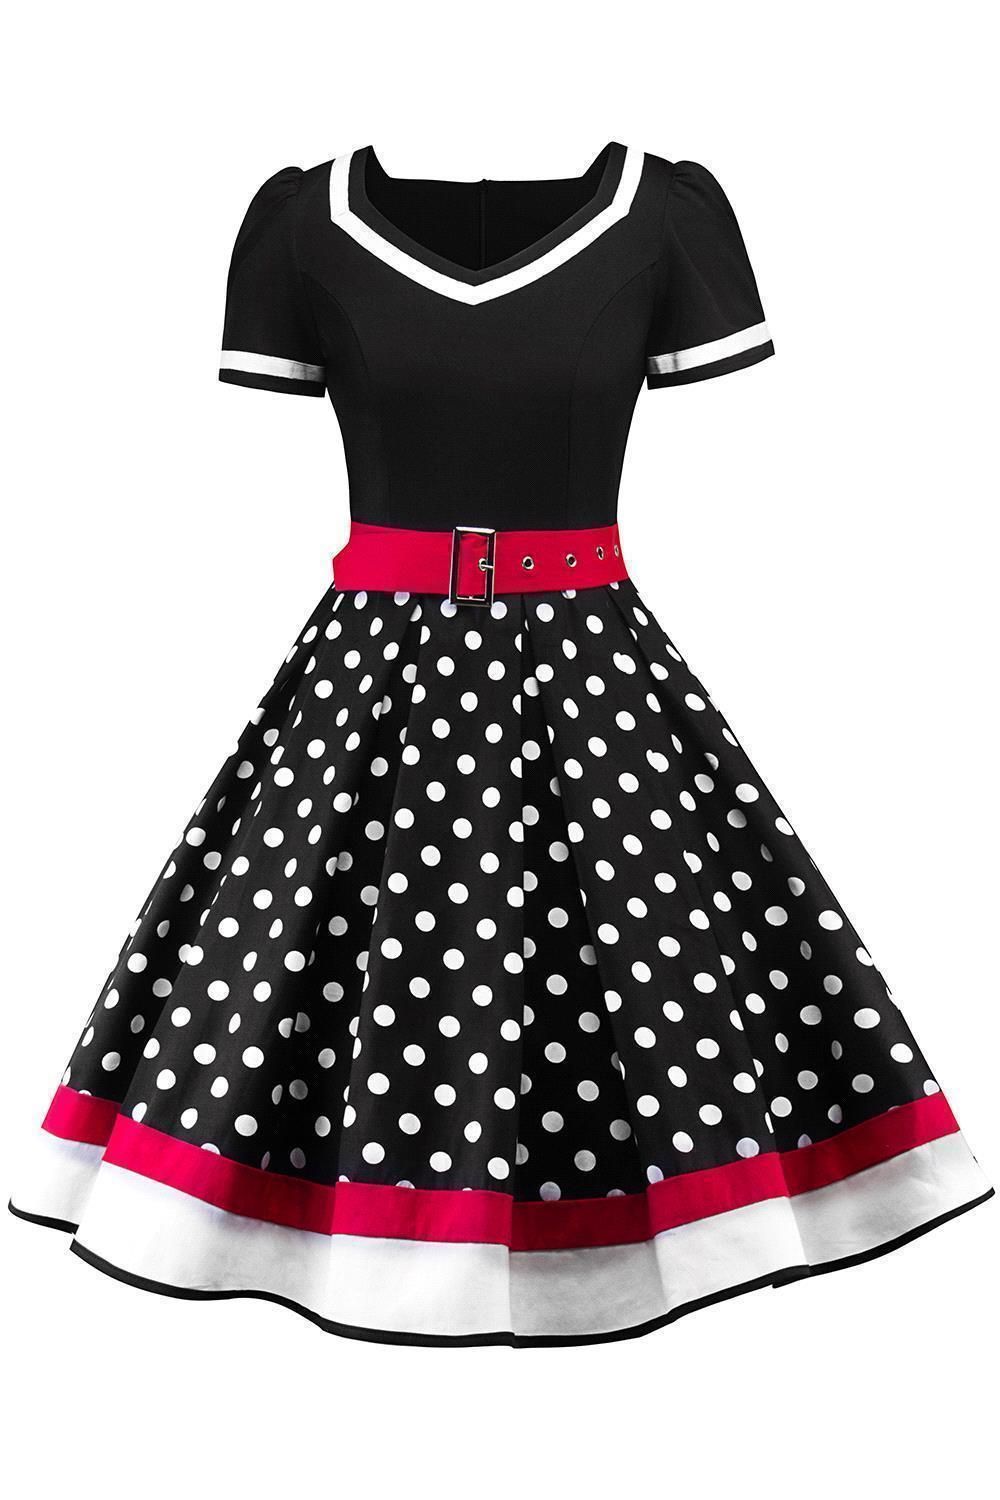 KUFEIUP 40s 50s Vintage Polka Dots A Line Rockabilly Swing Dresses for Women 